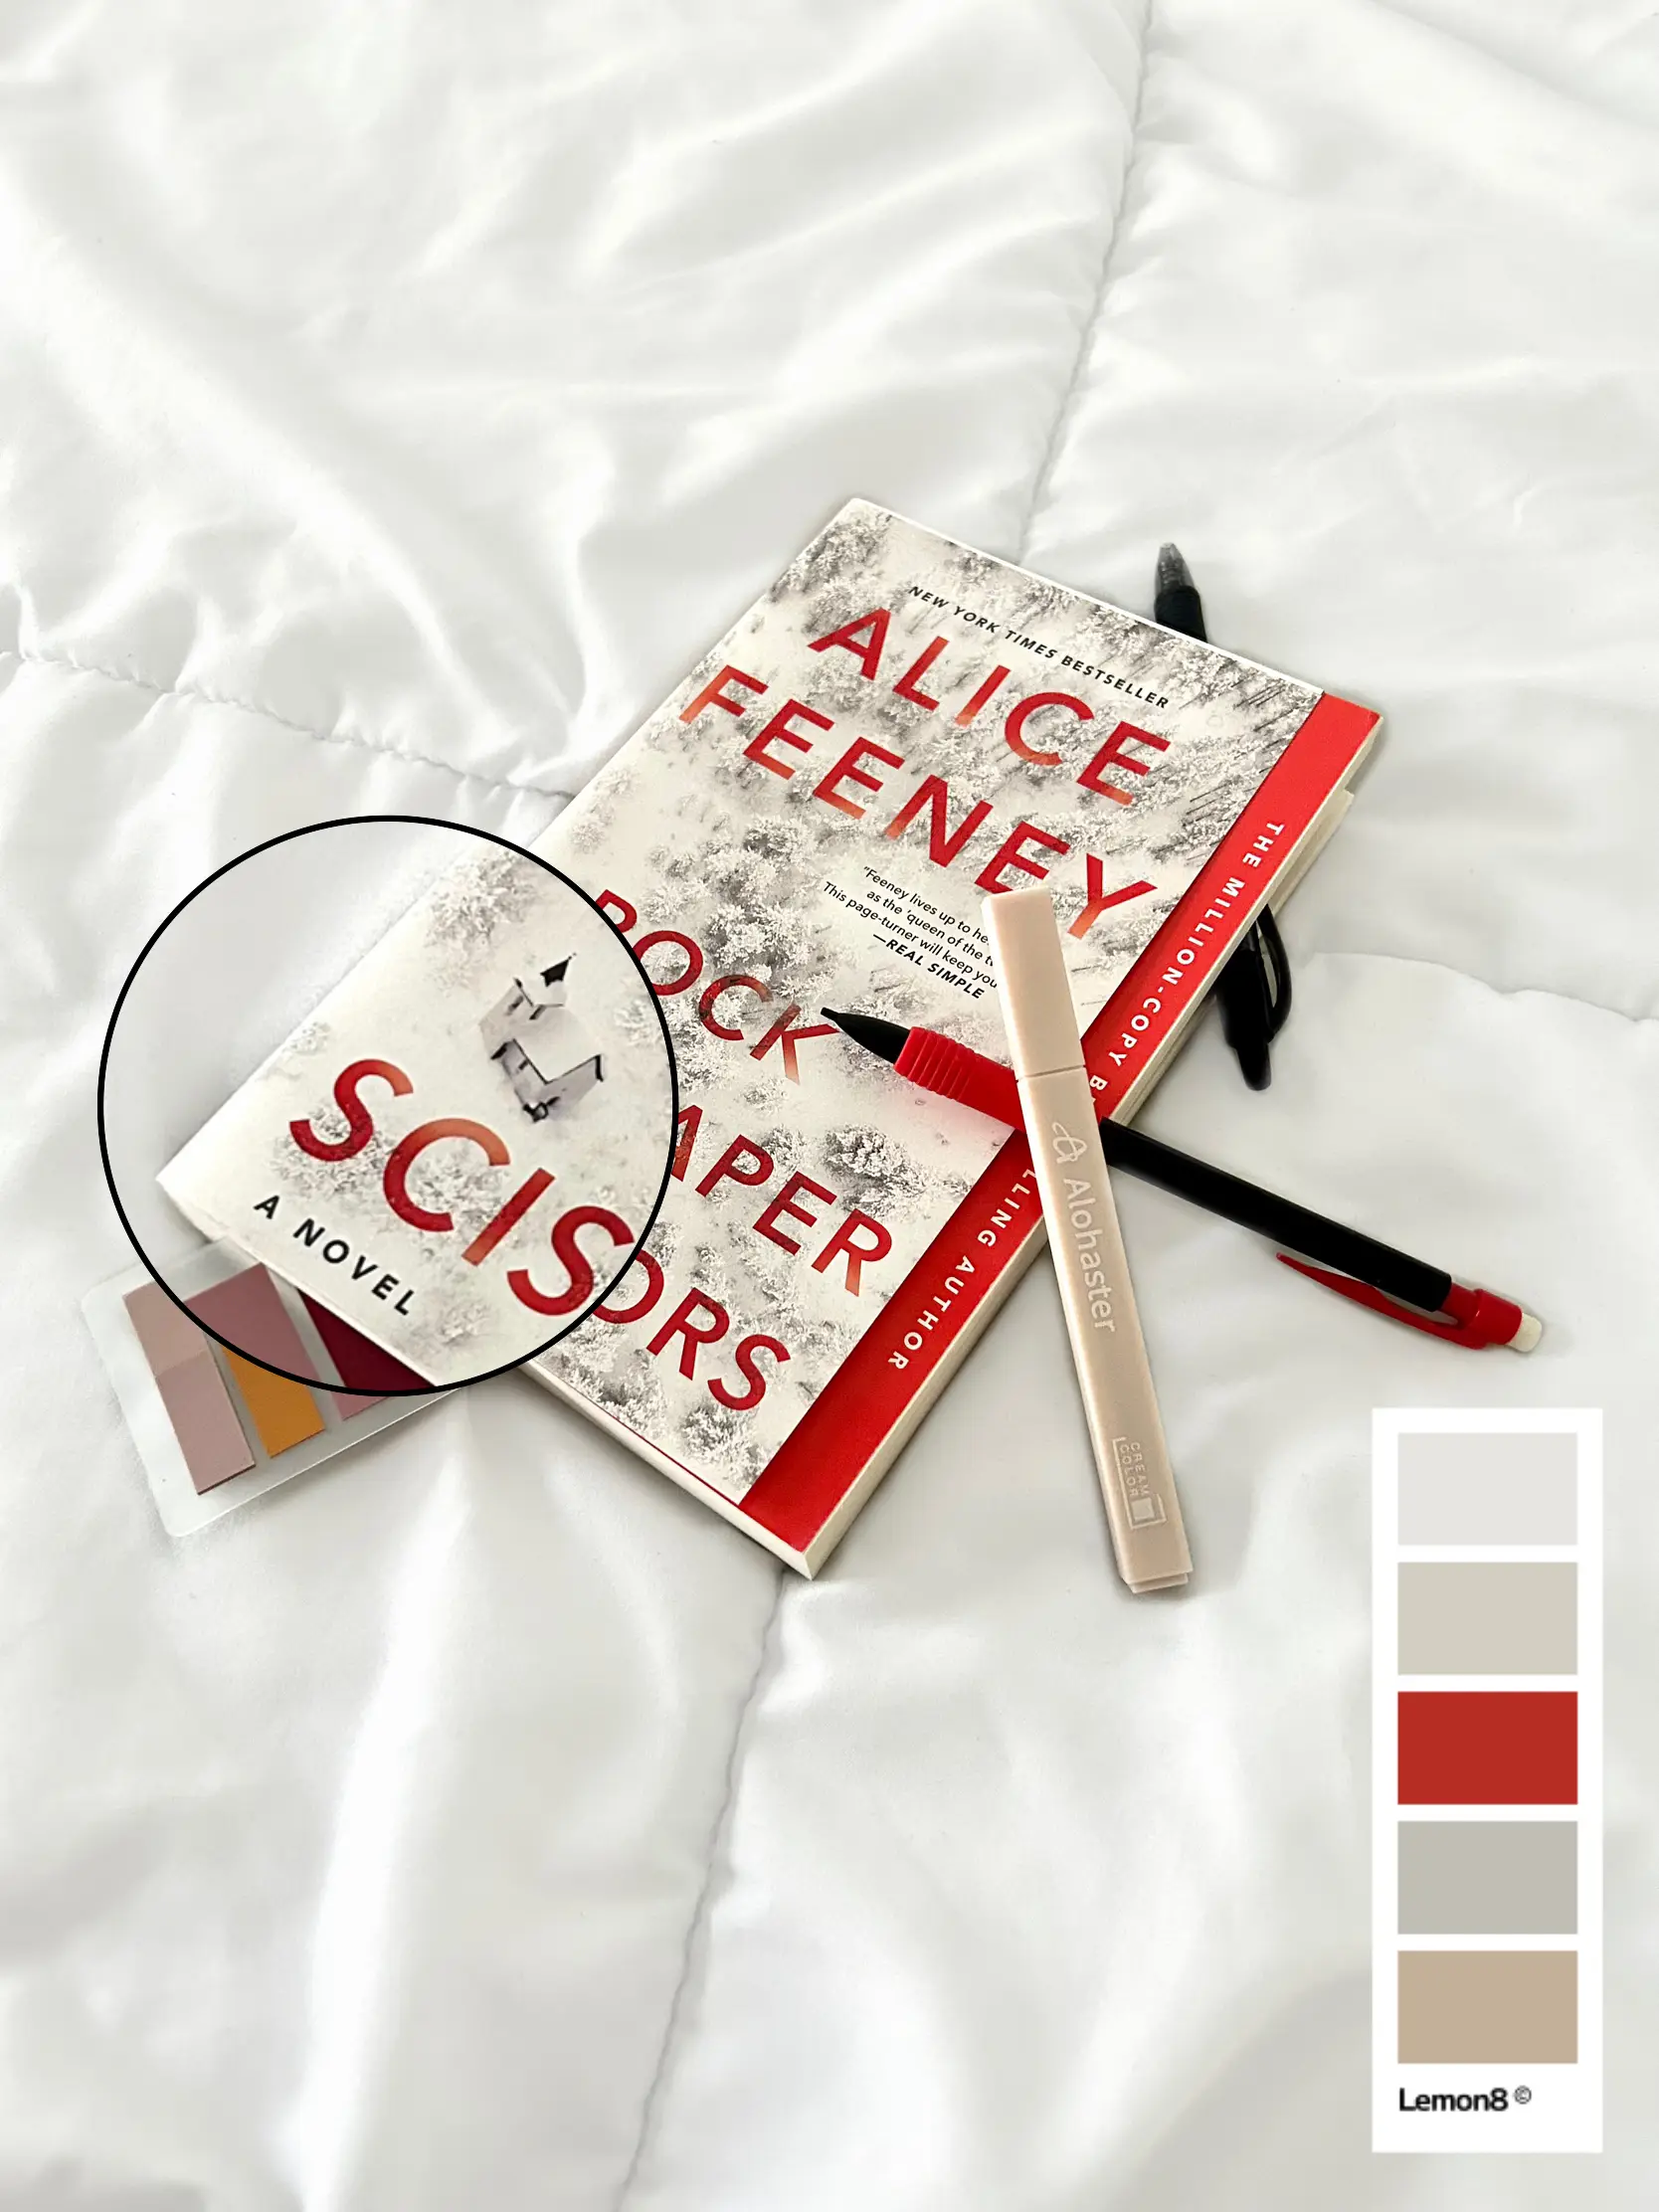 Rock Paper Scissors by Alice Feeney: Book Review